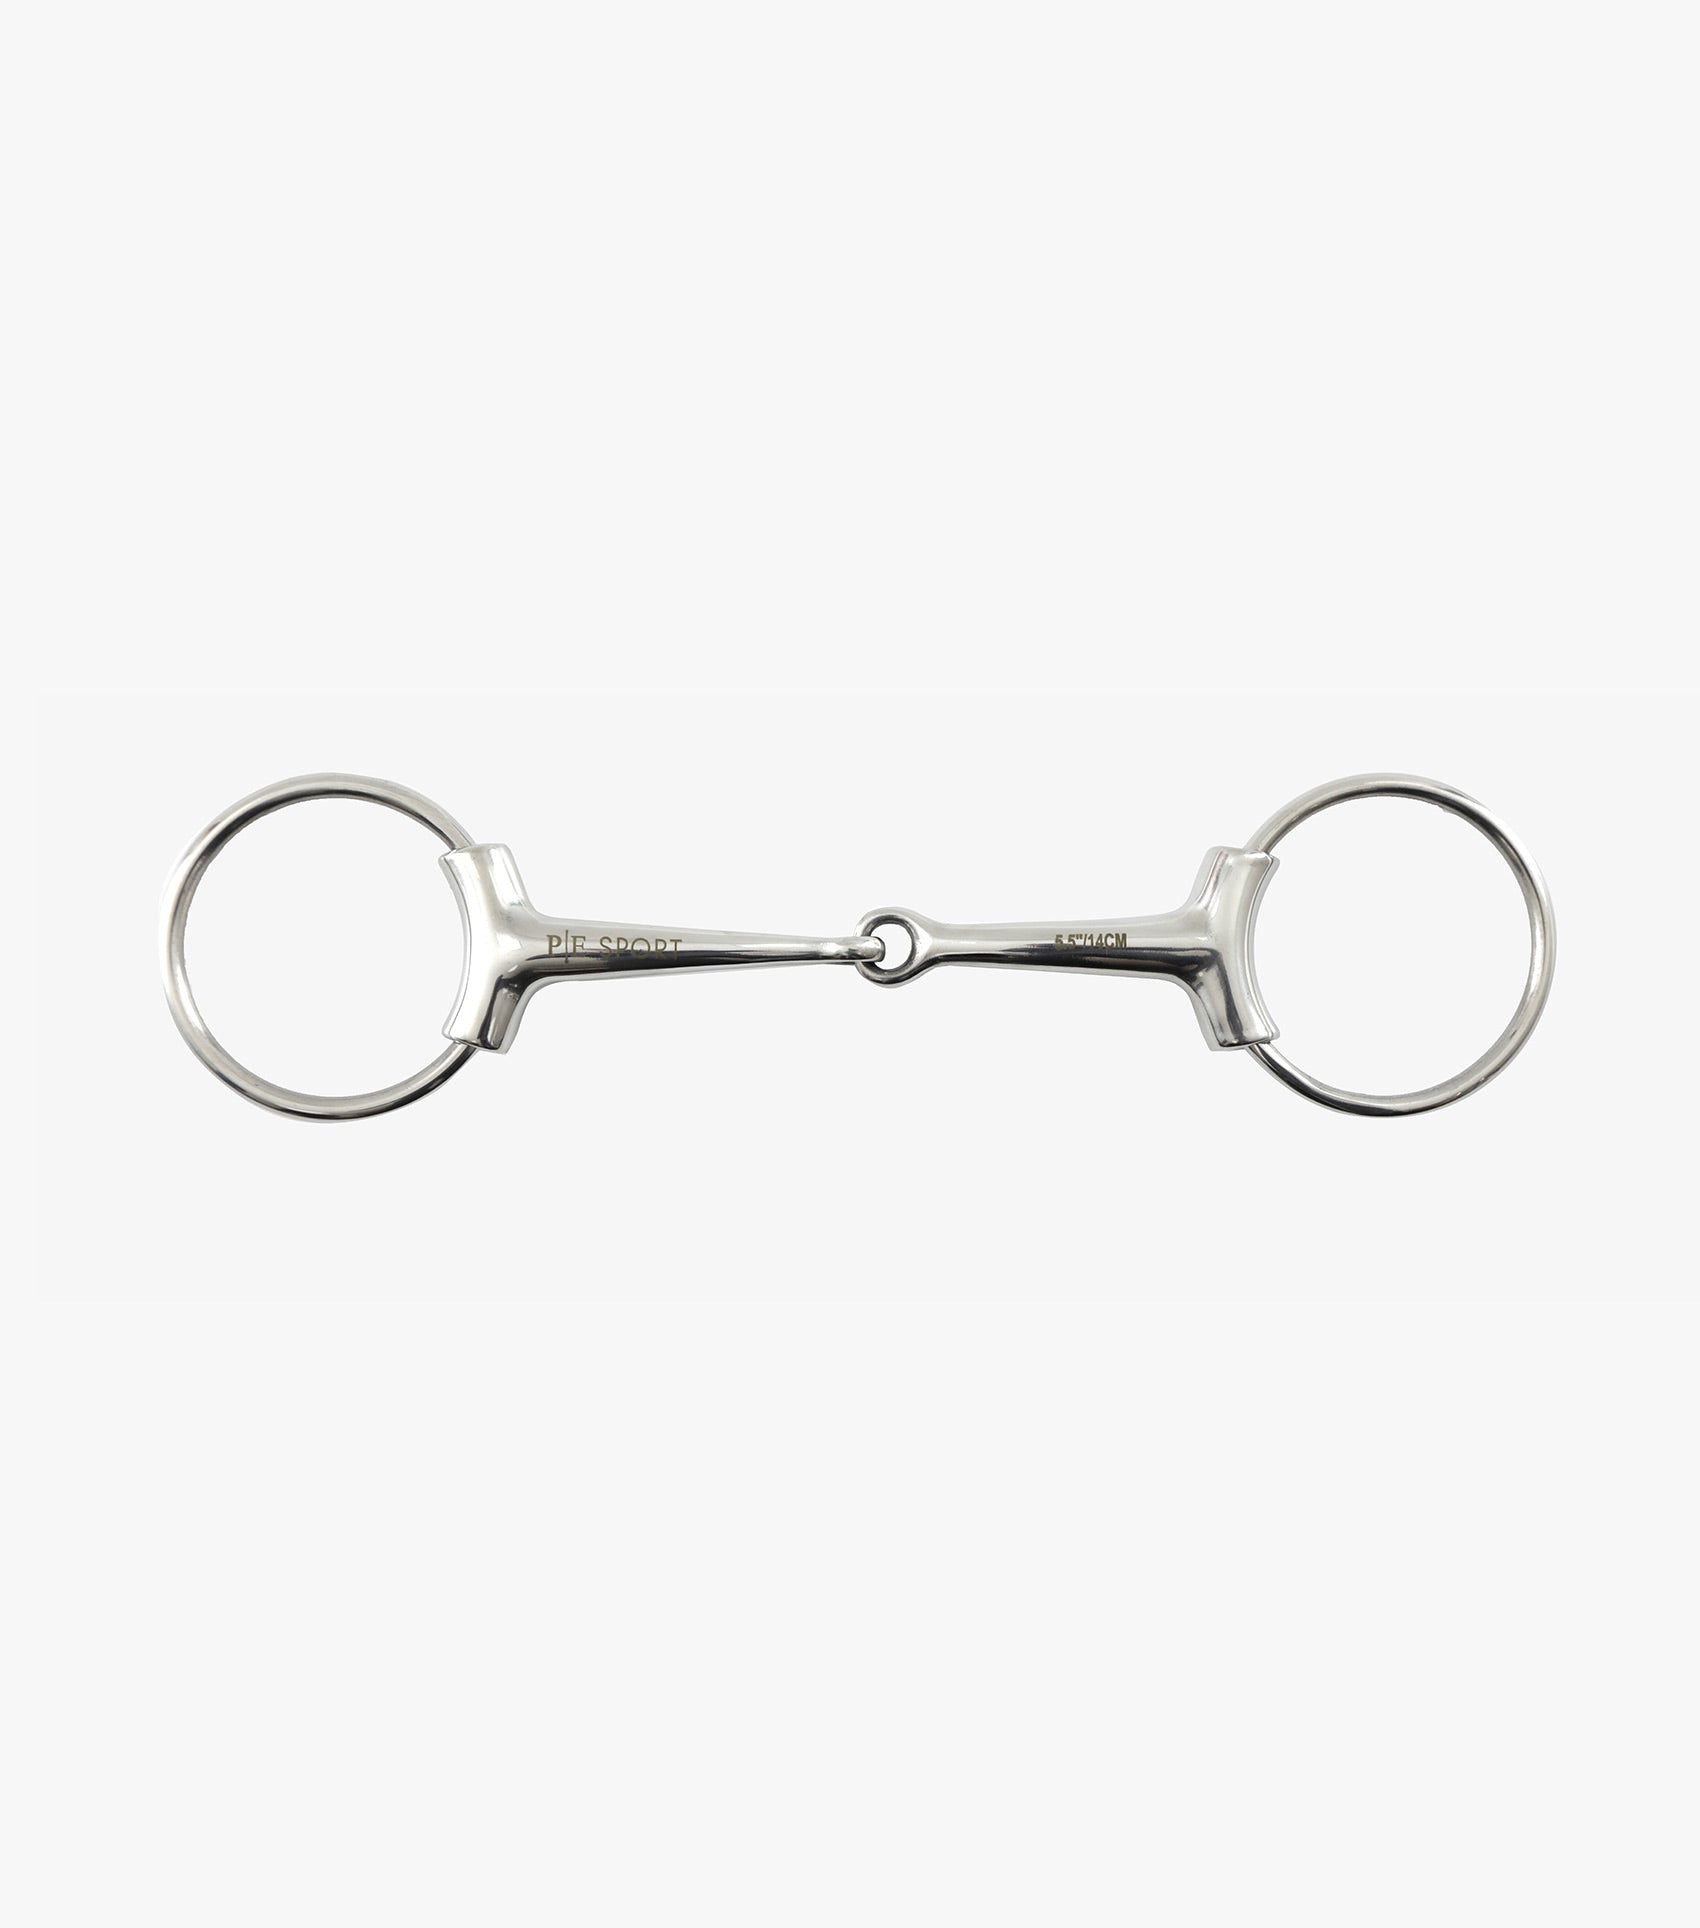 Ødelægge Latter Bred vifte PE - Loose Ring Sleeved Snaffle Metal – Essential Equestrian Wear